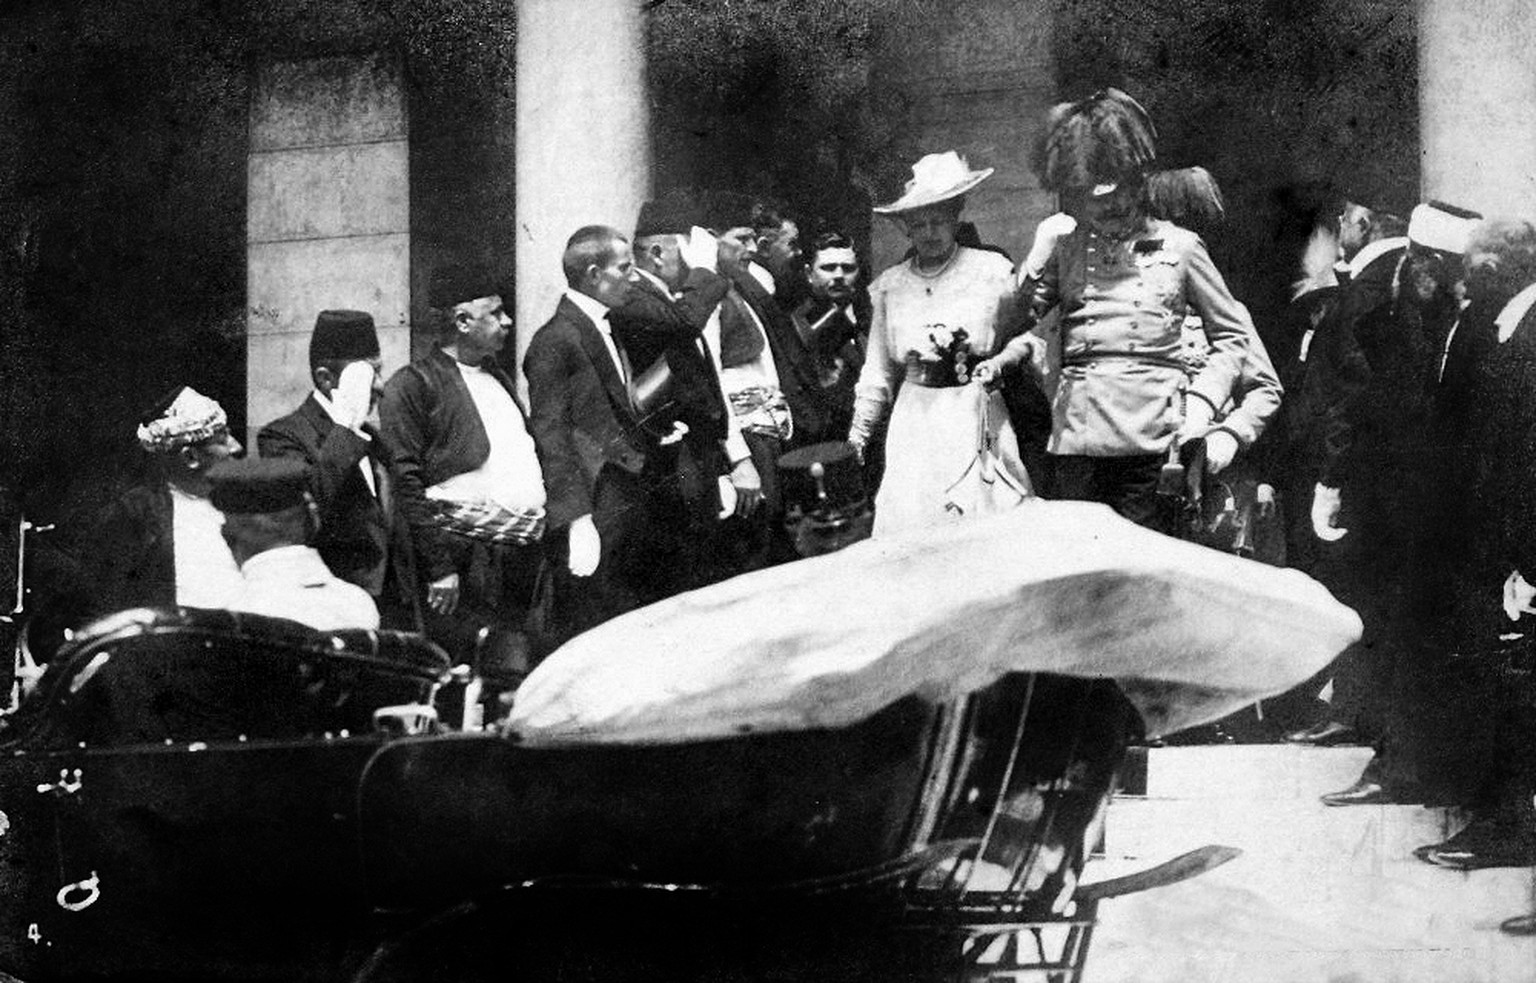 https://de.wikipedia.org/wiki/Attentat_von_Sarajevo#/media/File:Postcard_for_the_assassination_of_Archduke_Franz_Ferdinand_in_Sarajevo.jpg

Attentat von Sarajevo , Franz Ferdinand